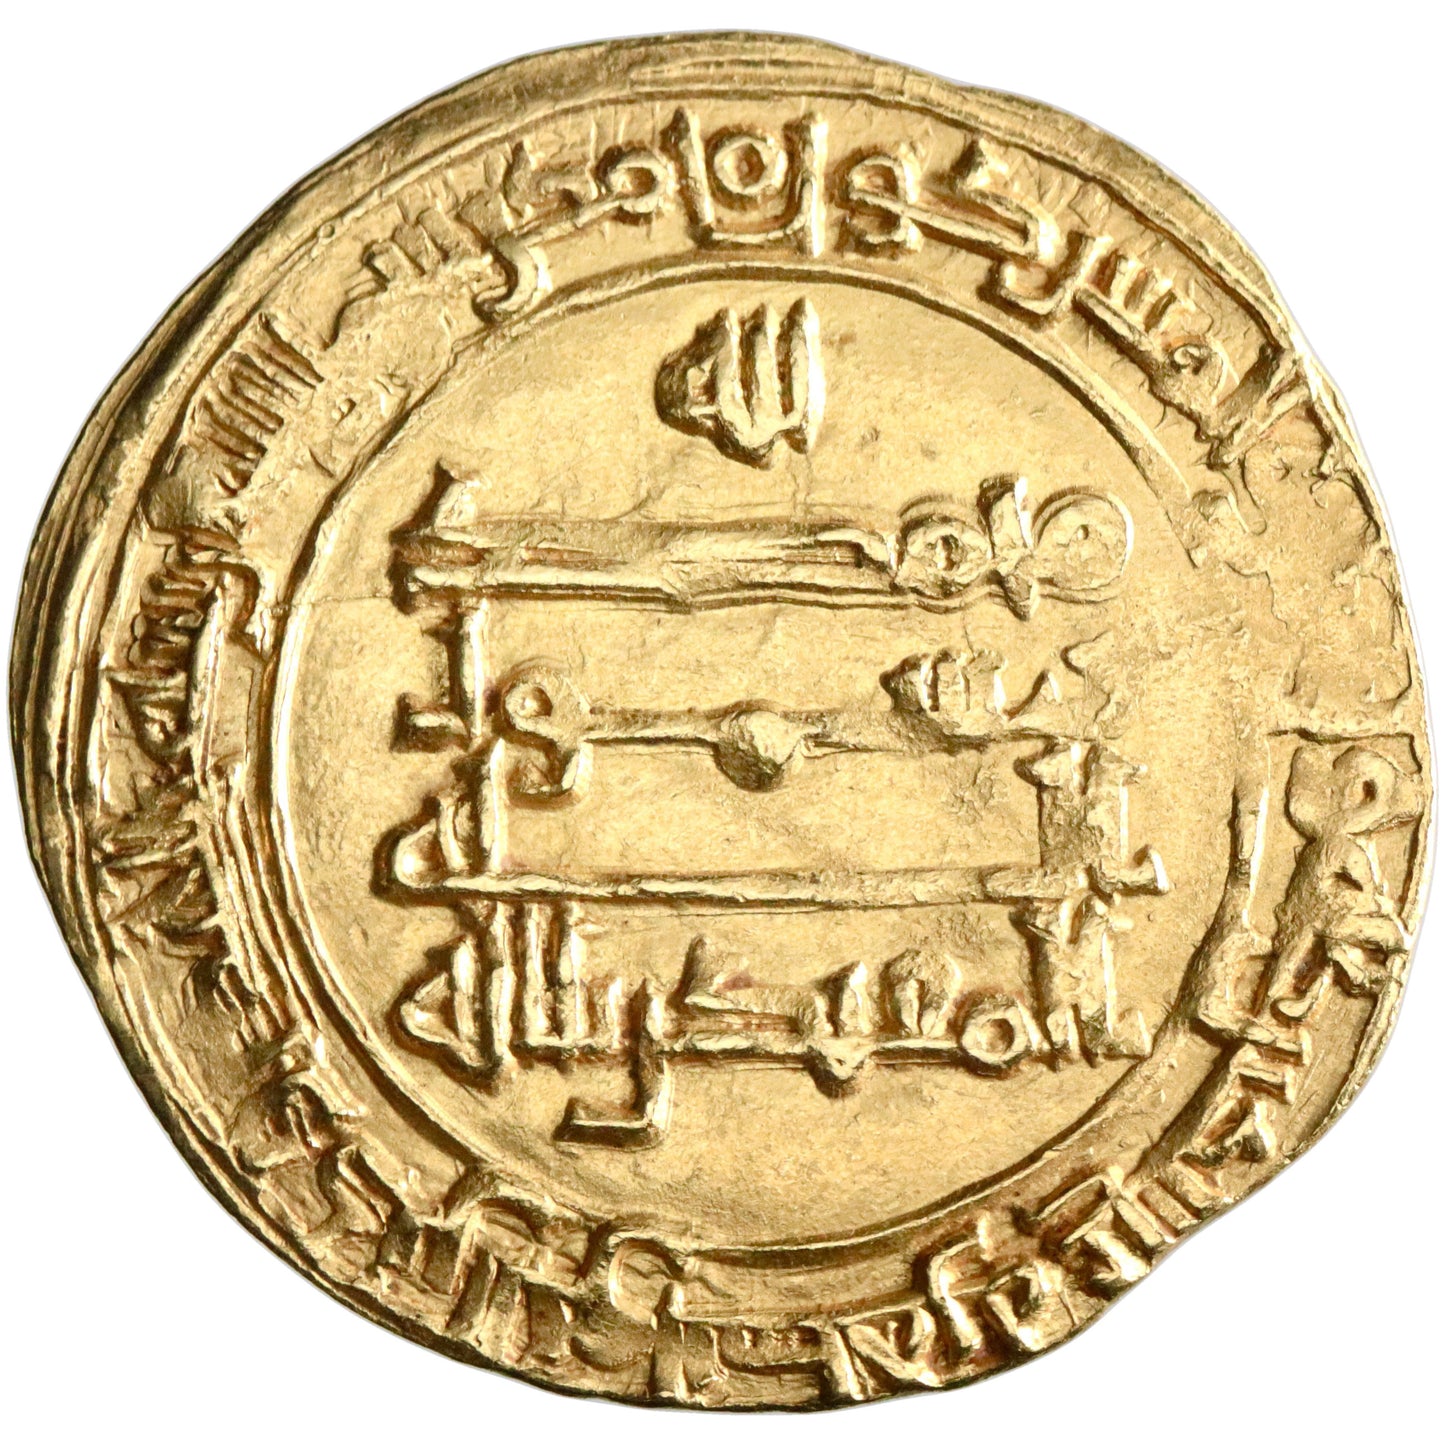 Abbasid, al-Muqtadir, gold dinar, Madinat al-Salam (Baghdad) mint, AH 308, citing Abu al-'Abbas